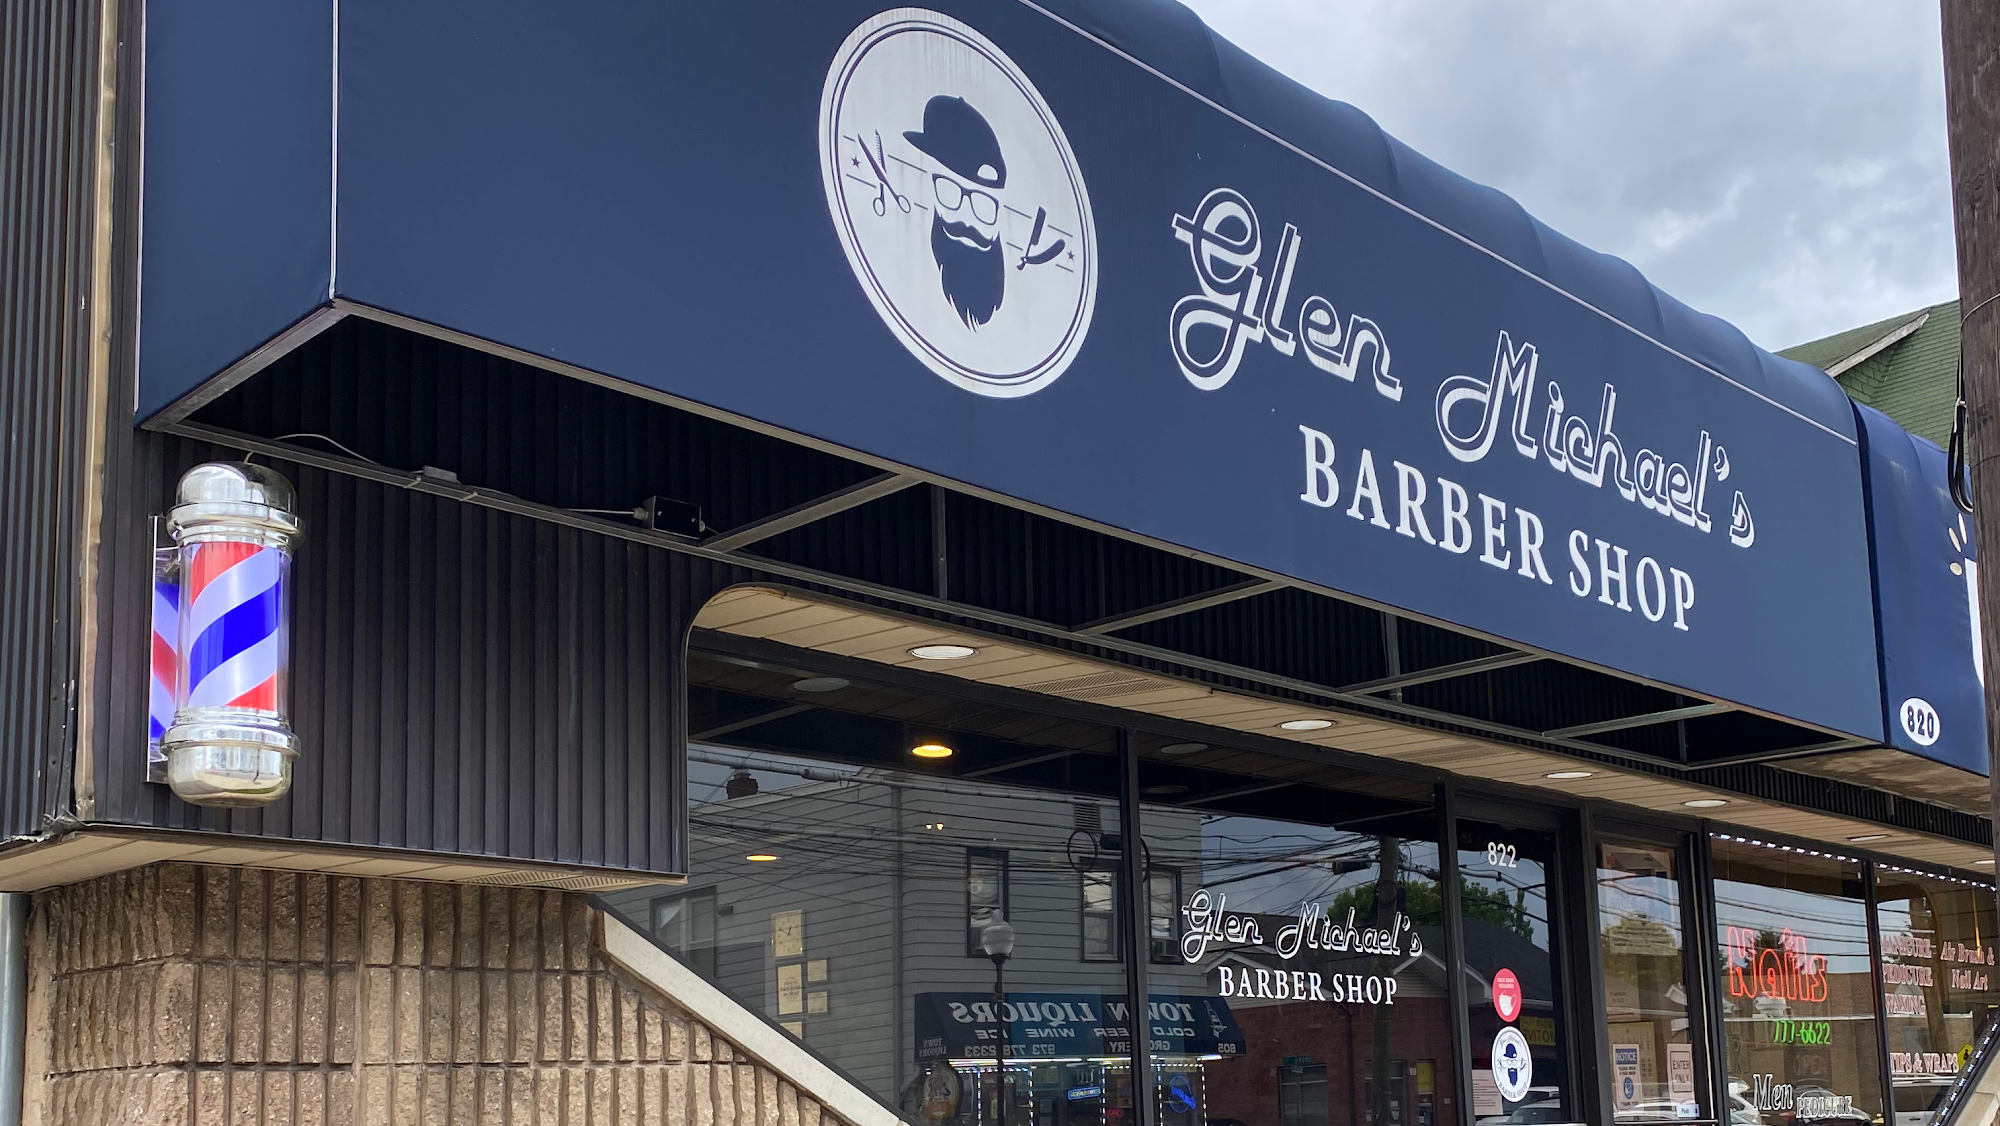 Glen Michael’s Barber Shop